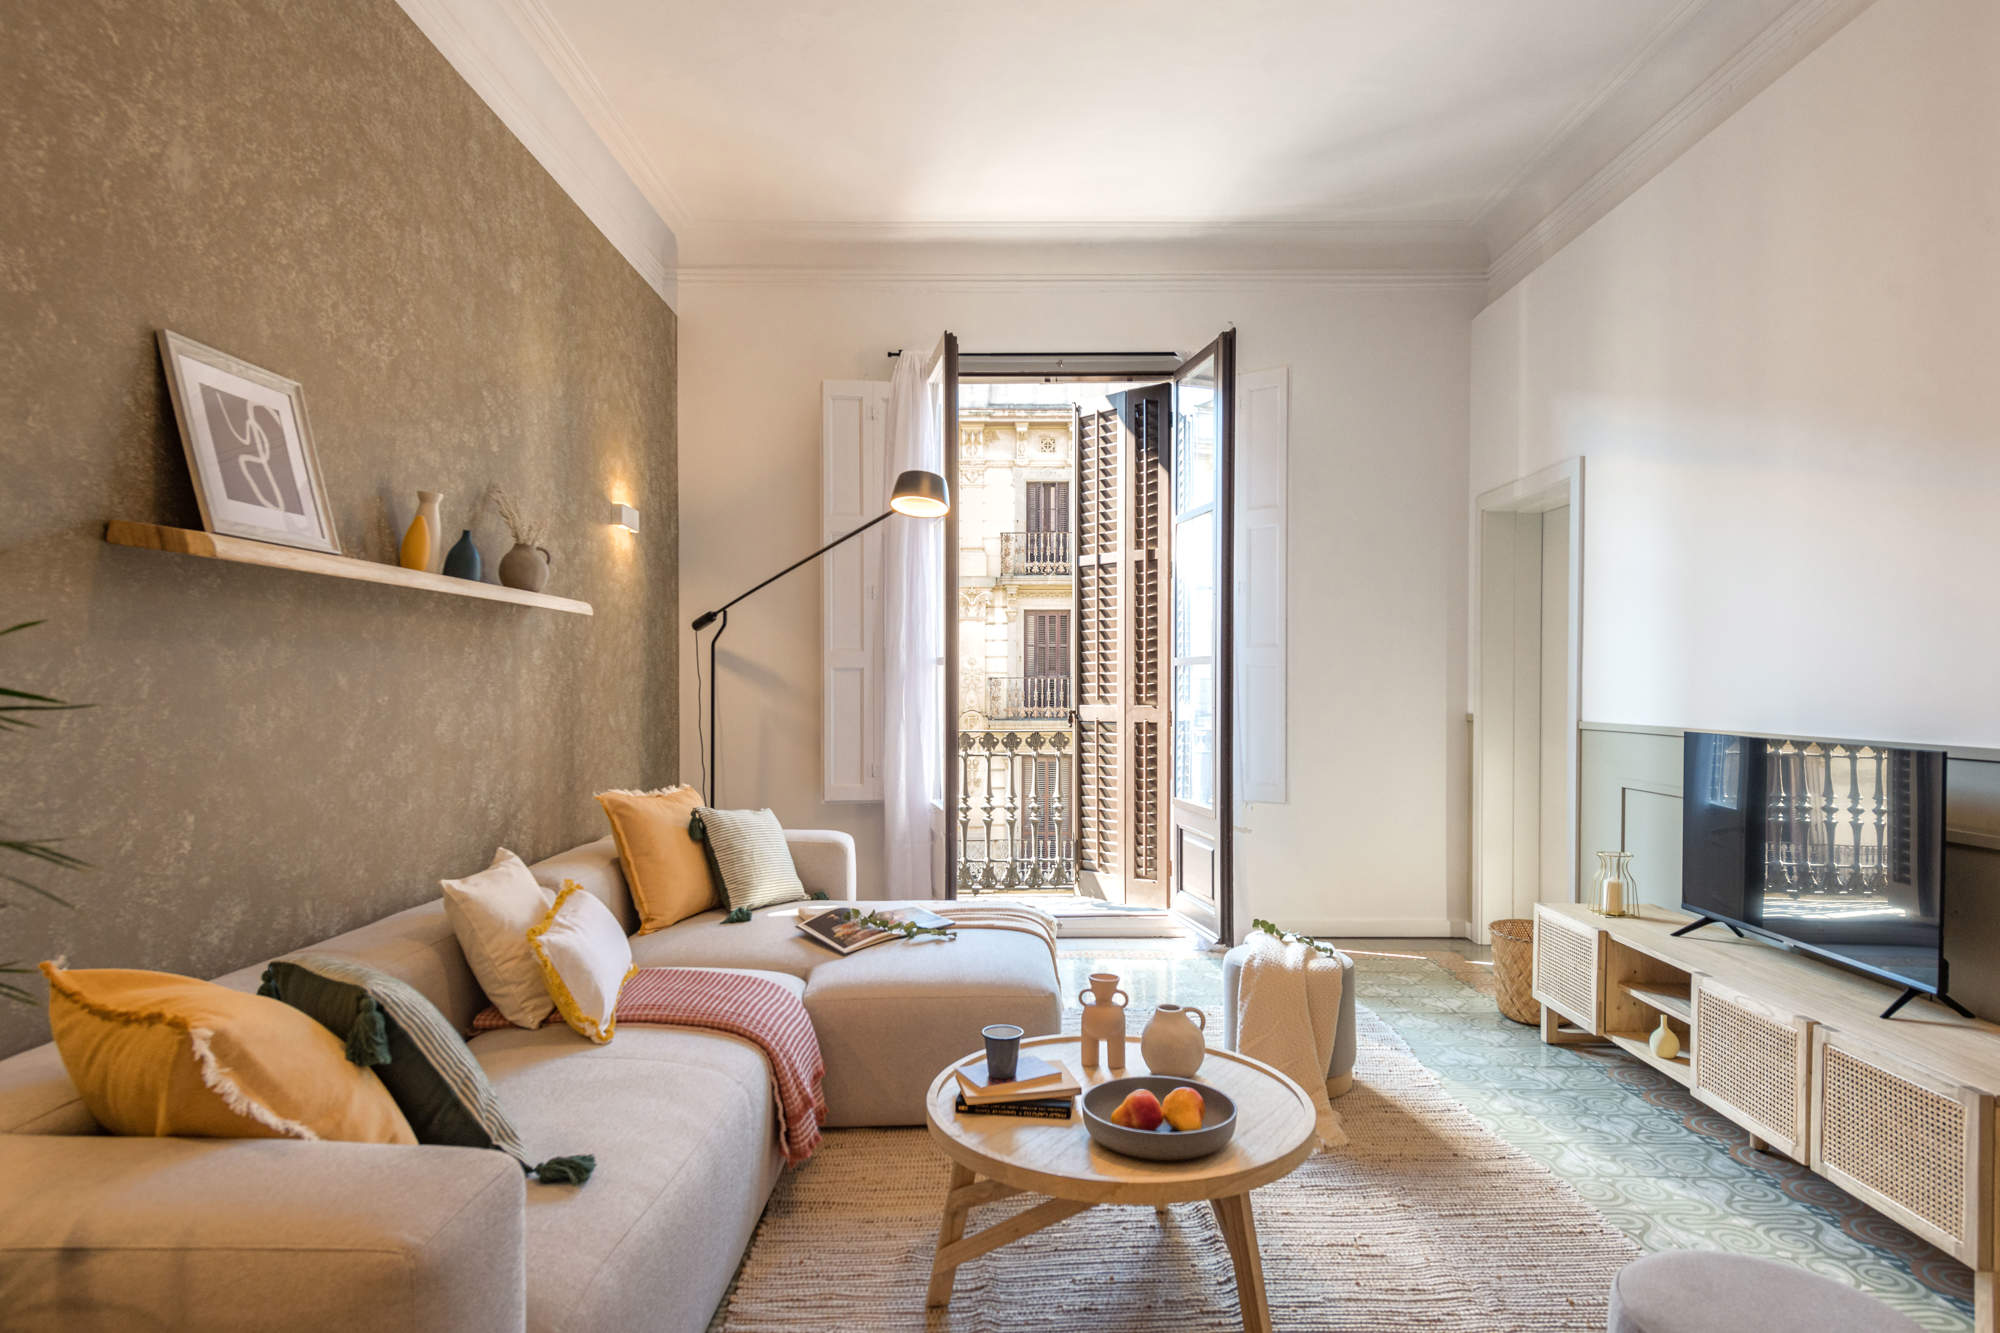 Salón pequeño con sofá con chaise longue, arrimadero, papel pintado y acceso a la terraza.